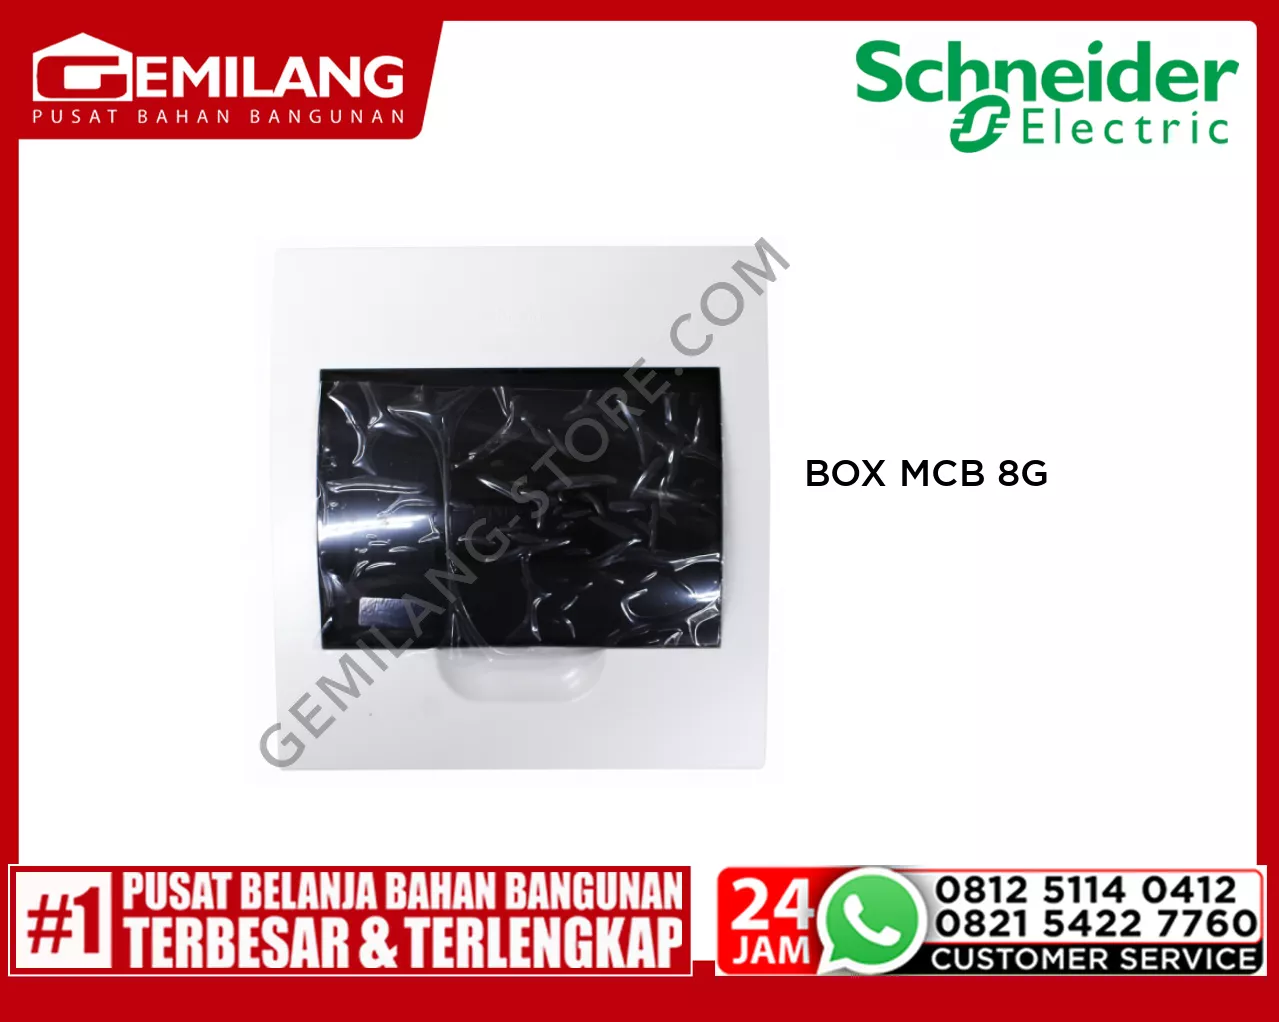 SCHNEIDER BOX MCB 8G